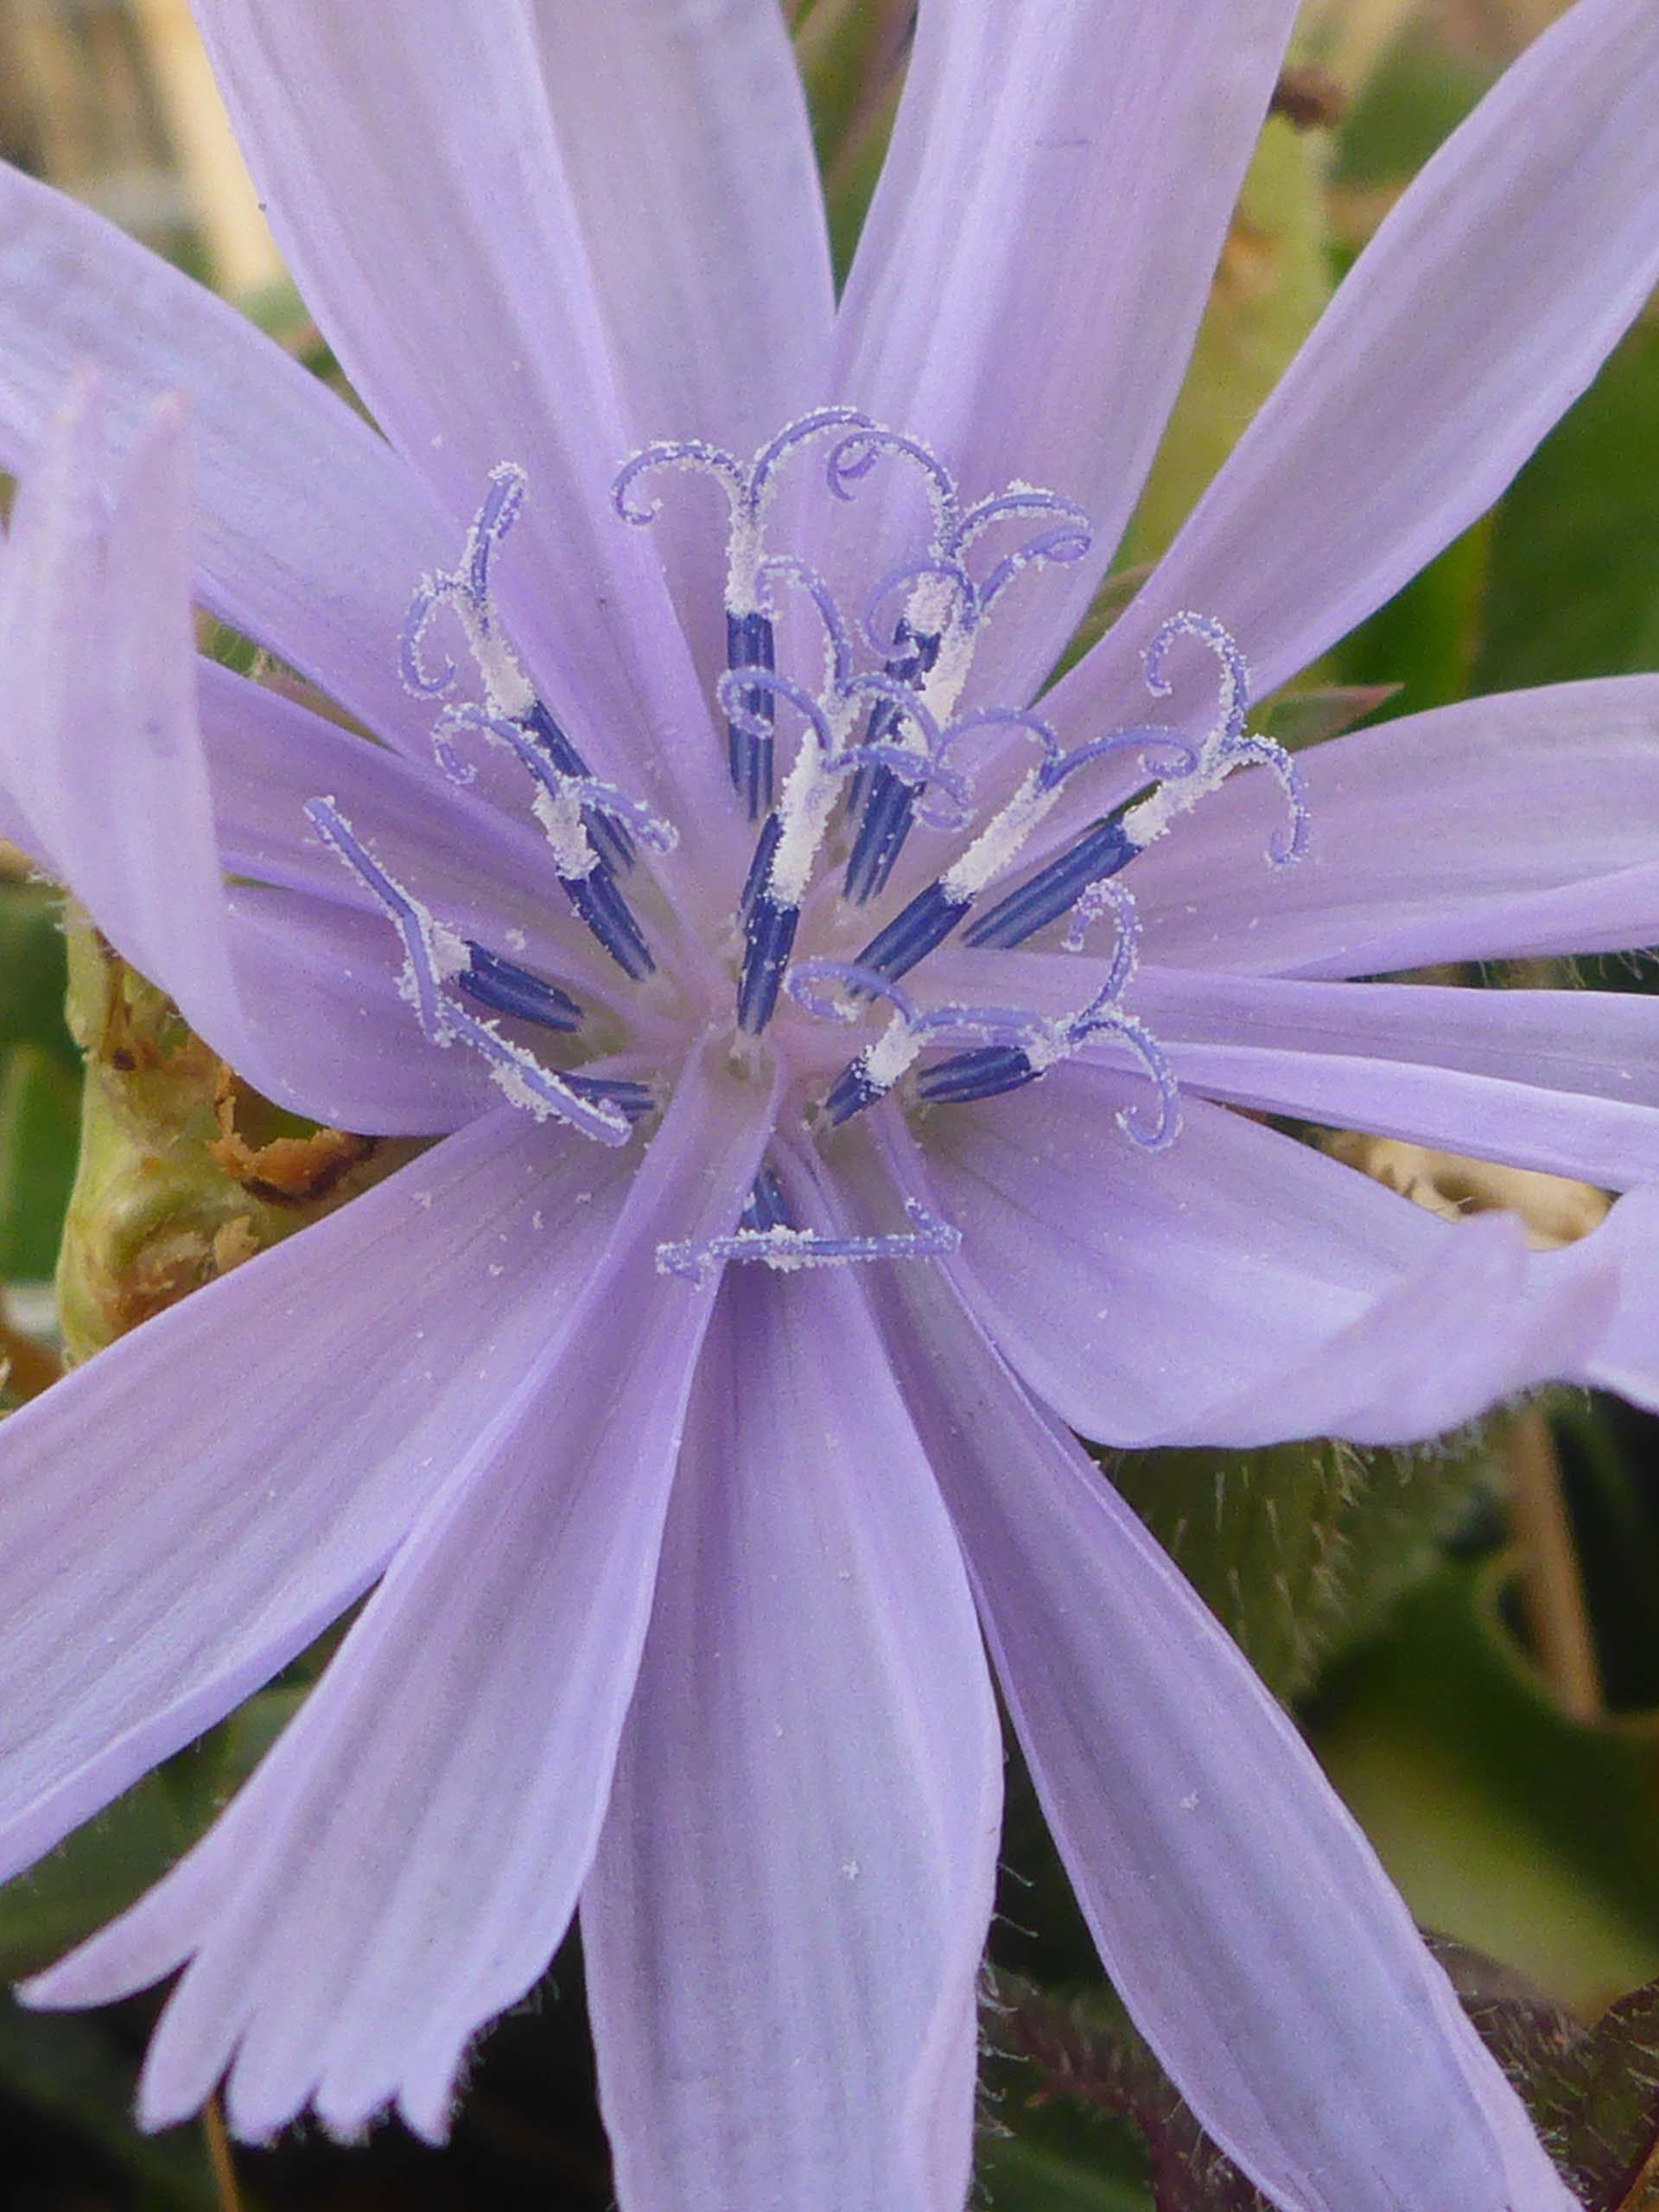 Chicory close-up. D. Burk.